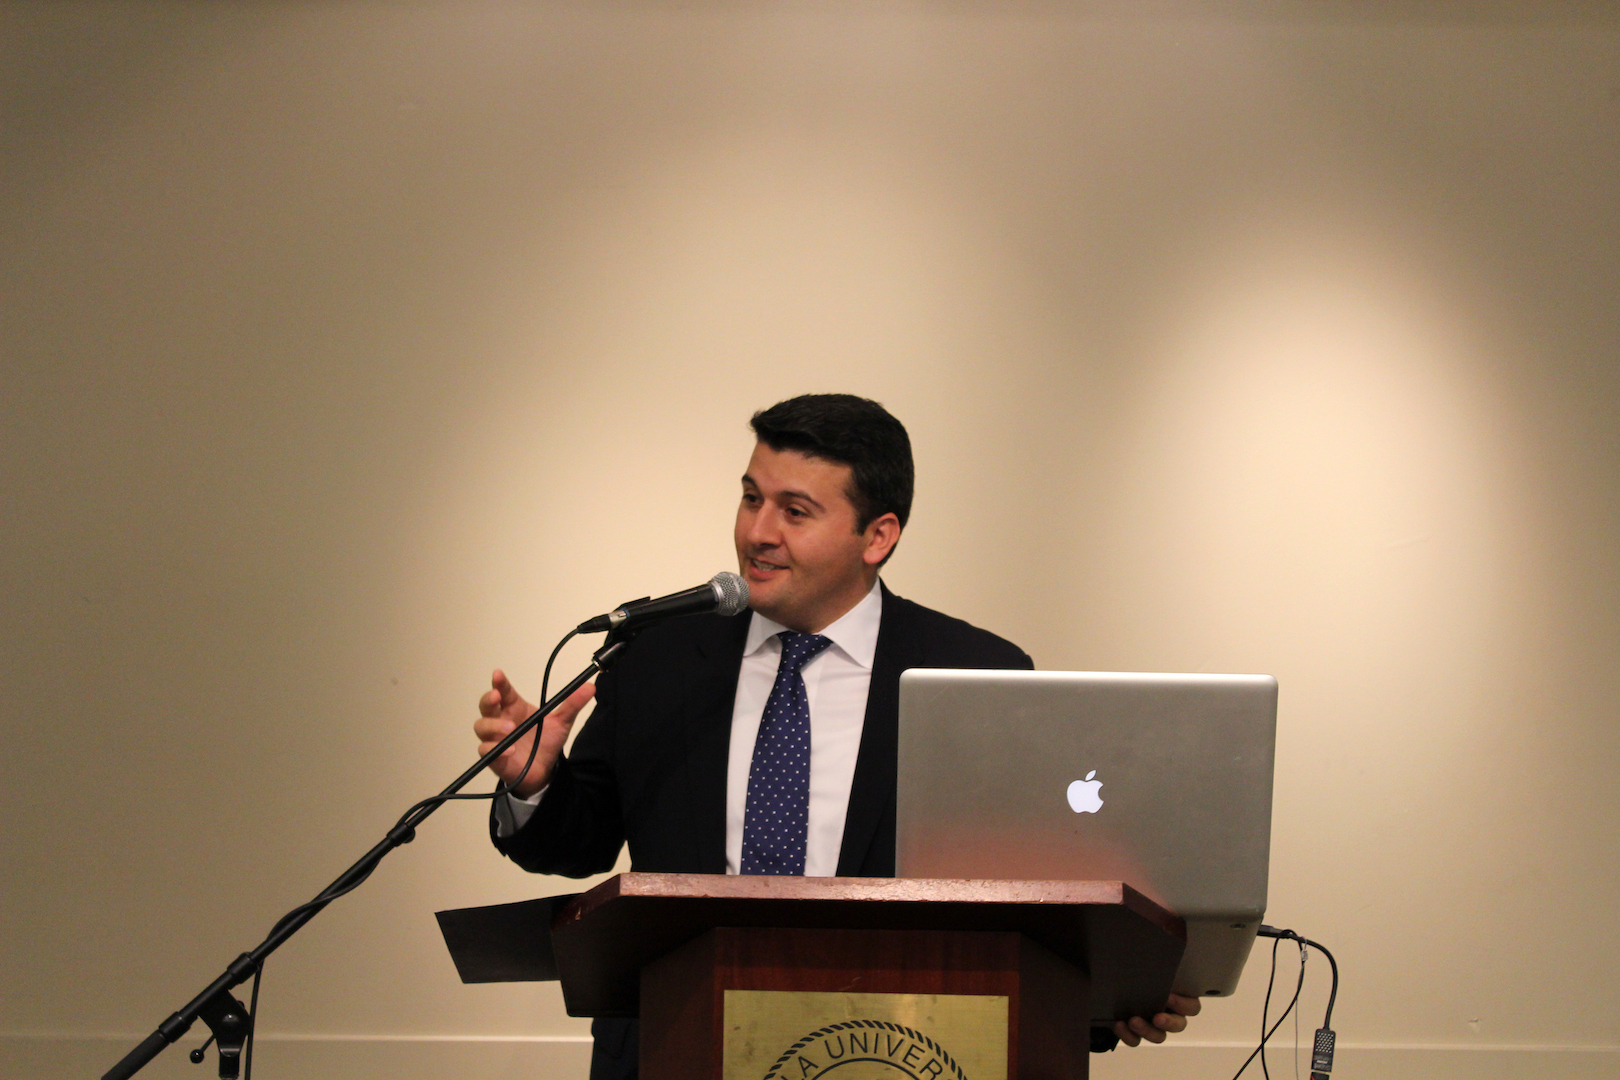 The Biola University of Los Angeles hosts an event on Azerbaijan